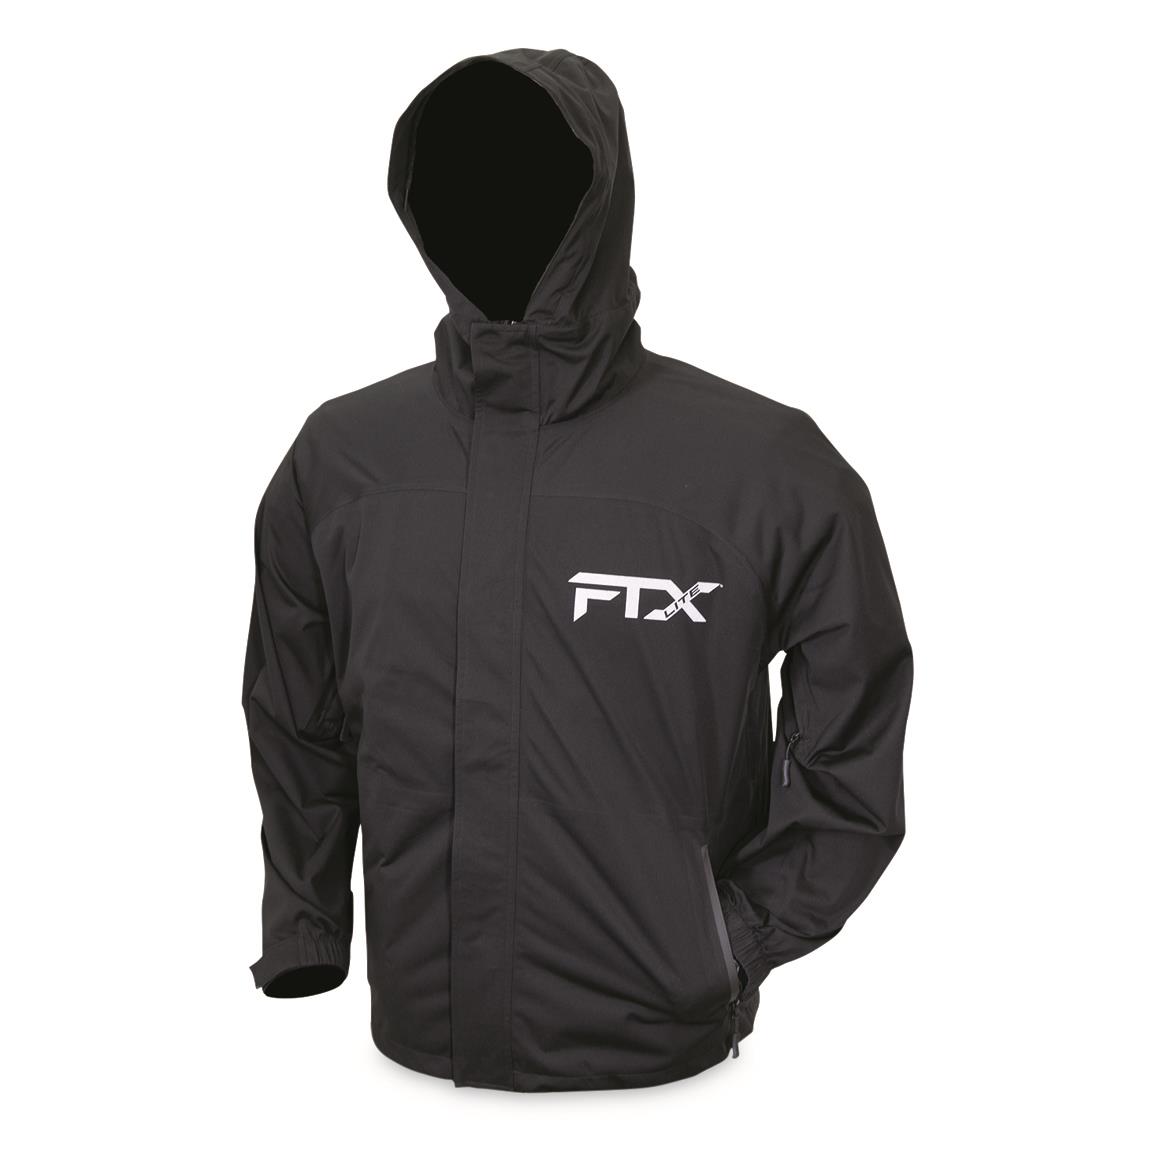 Frogg Toggs Men's FTX Lite Jacket, Black